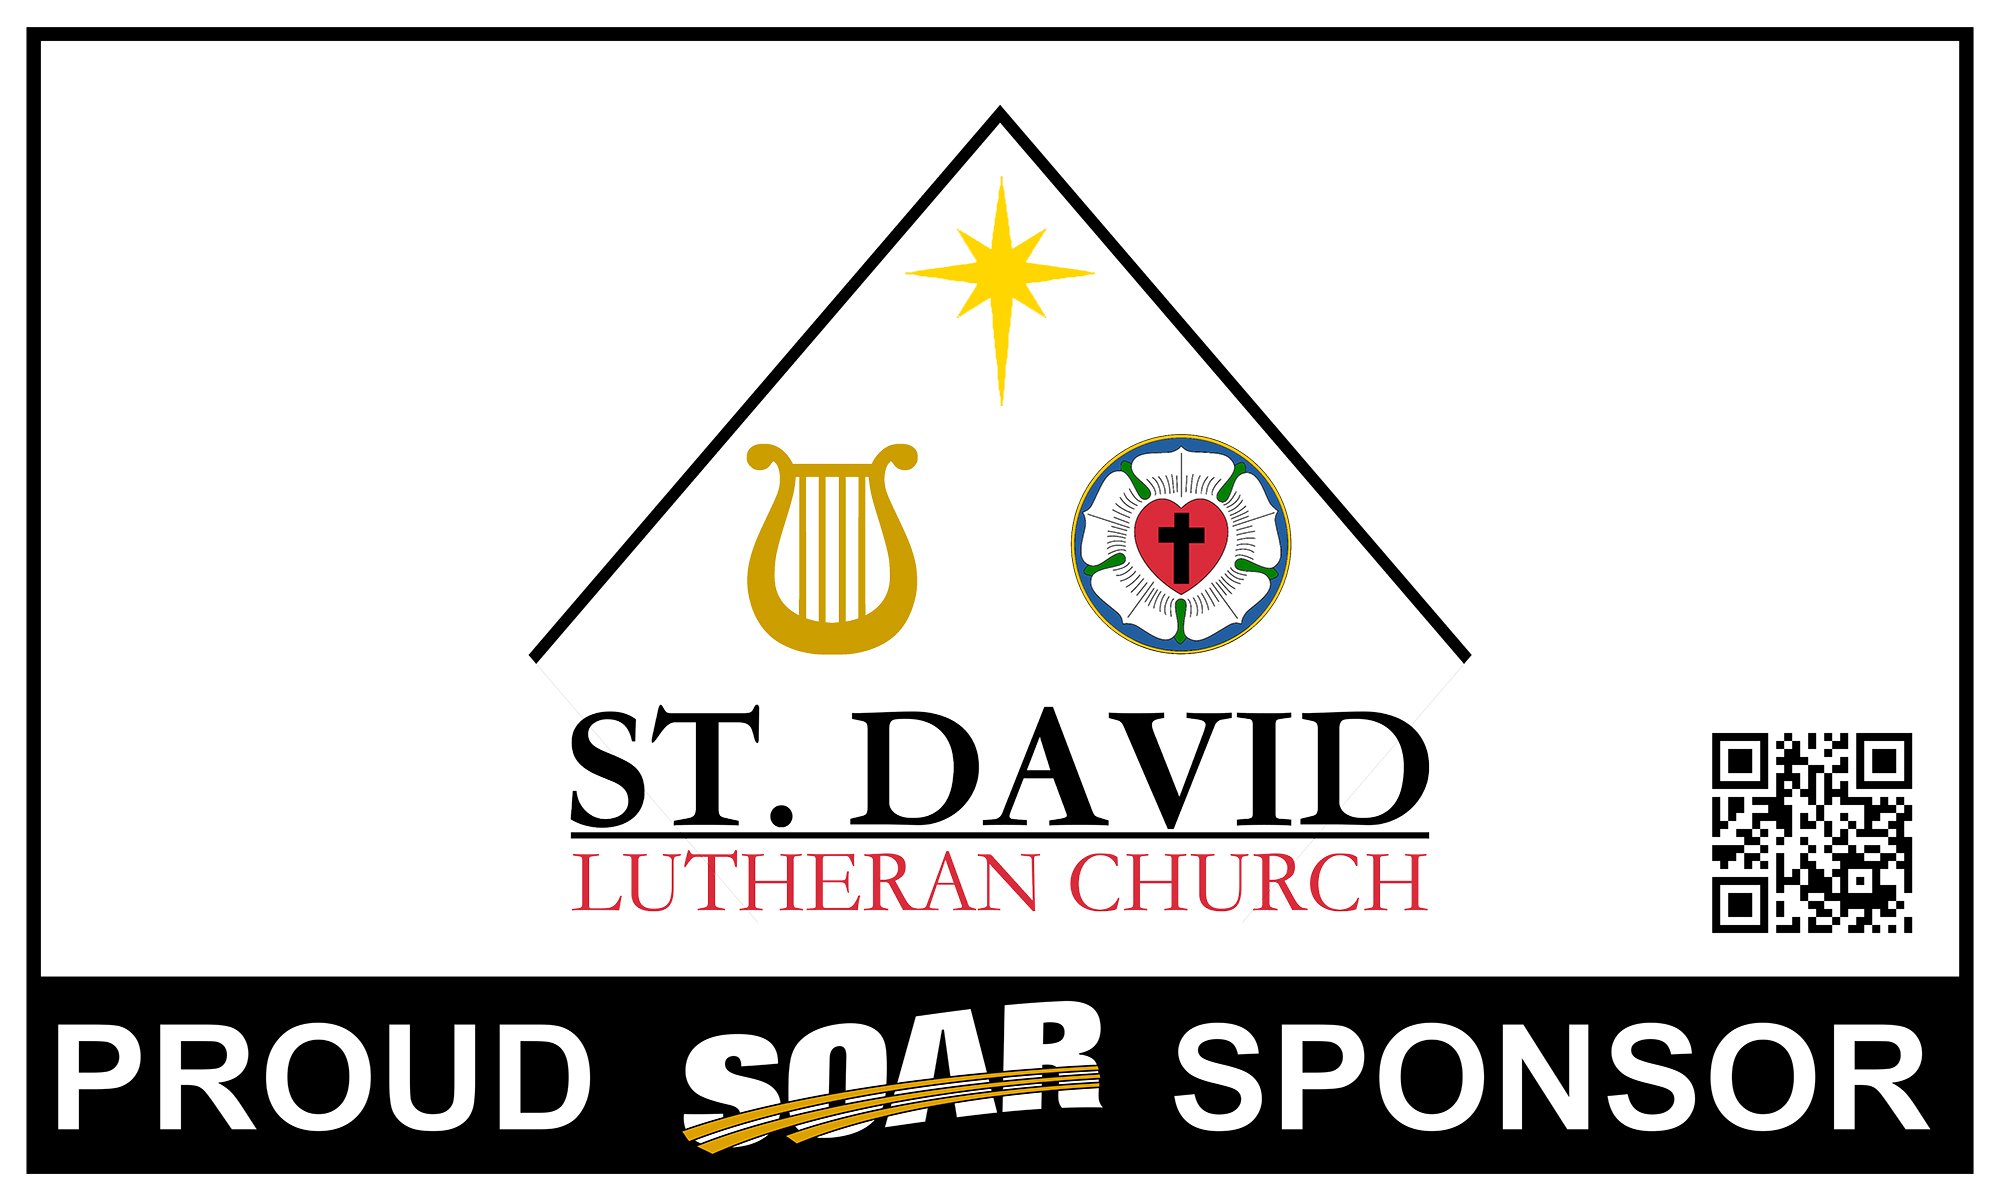 St David Lutheran Church Sponsor Banner.jpg